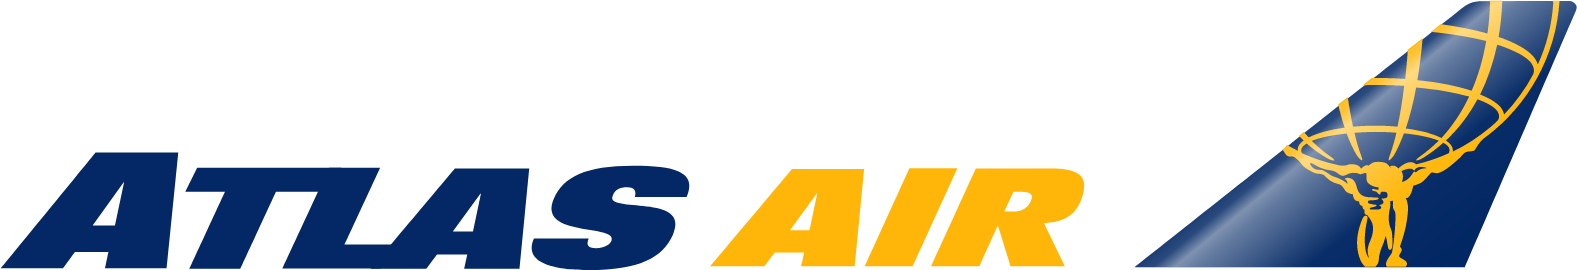 Atlas Air Worldwide Holdings logo large (transparent PNG)